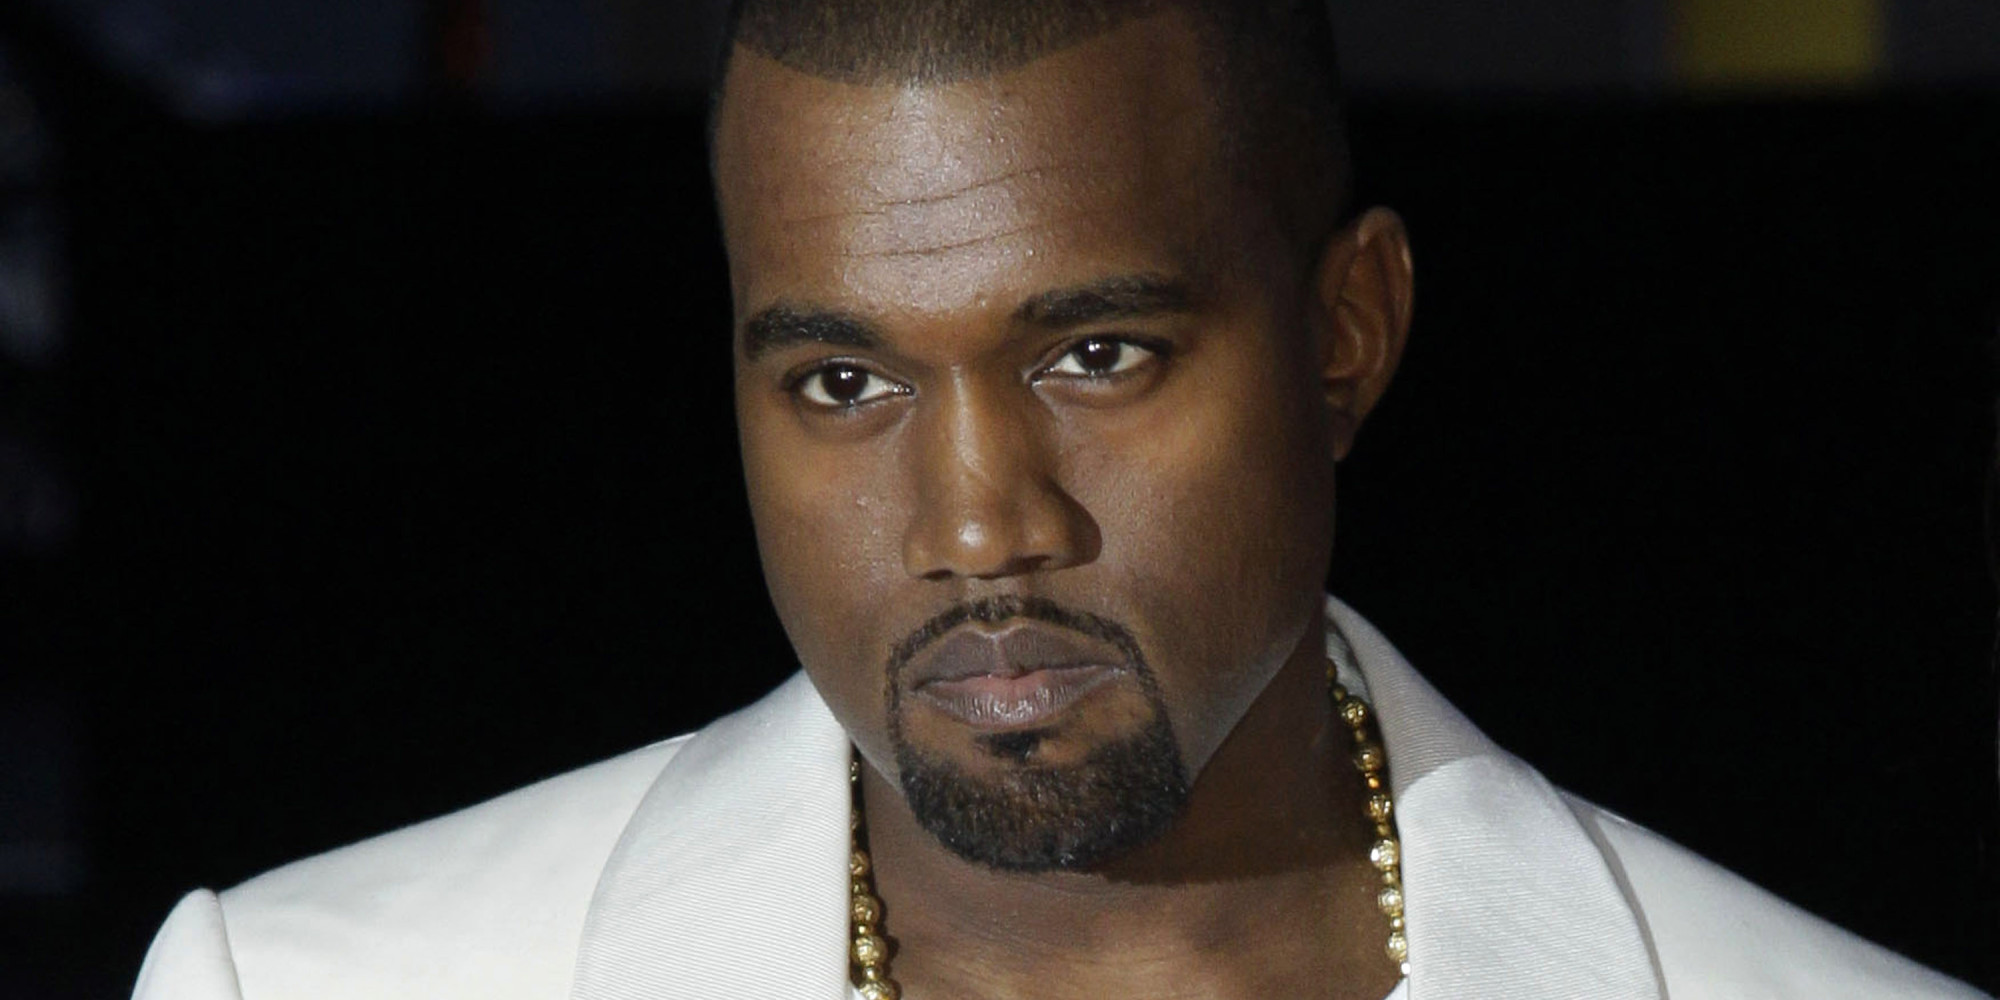 Kanye West acusado por plagio - ACN